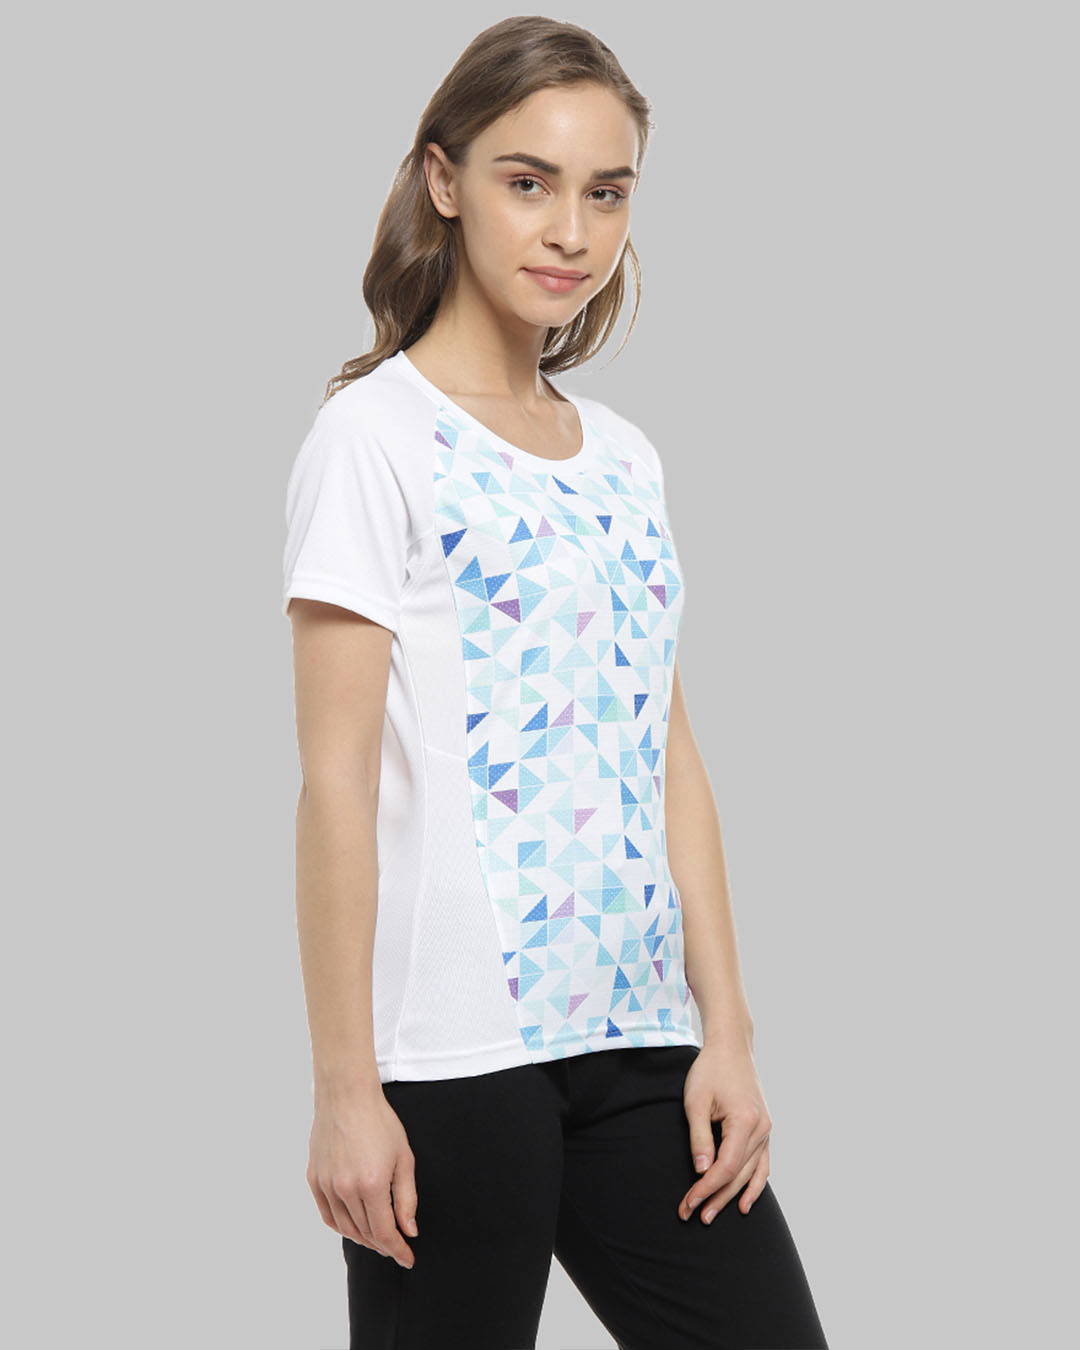 Shop Graphic Print Women's Round Neck White Sports Jersey T-Shirt-Back